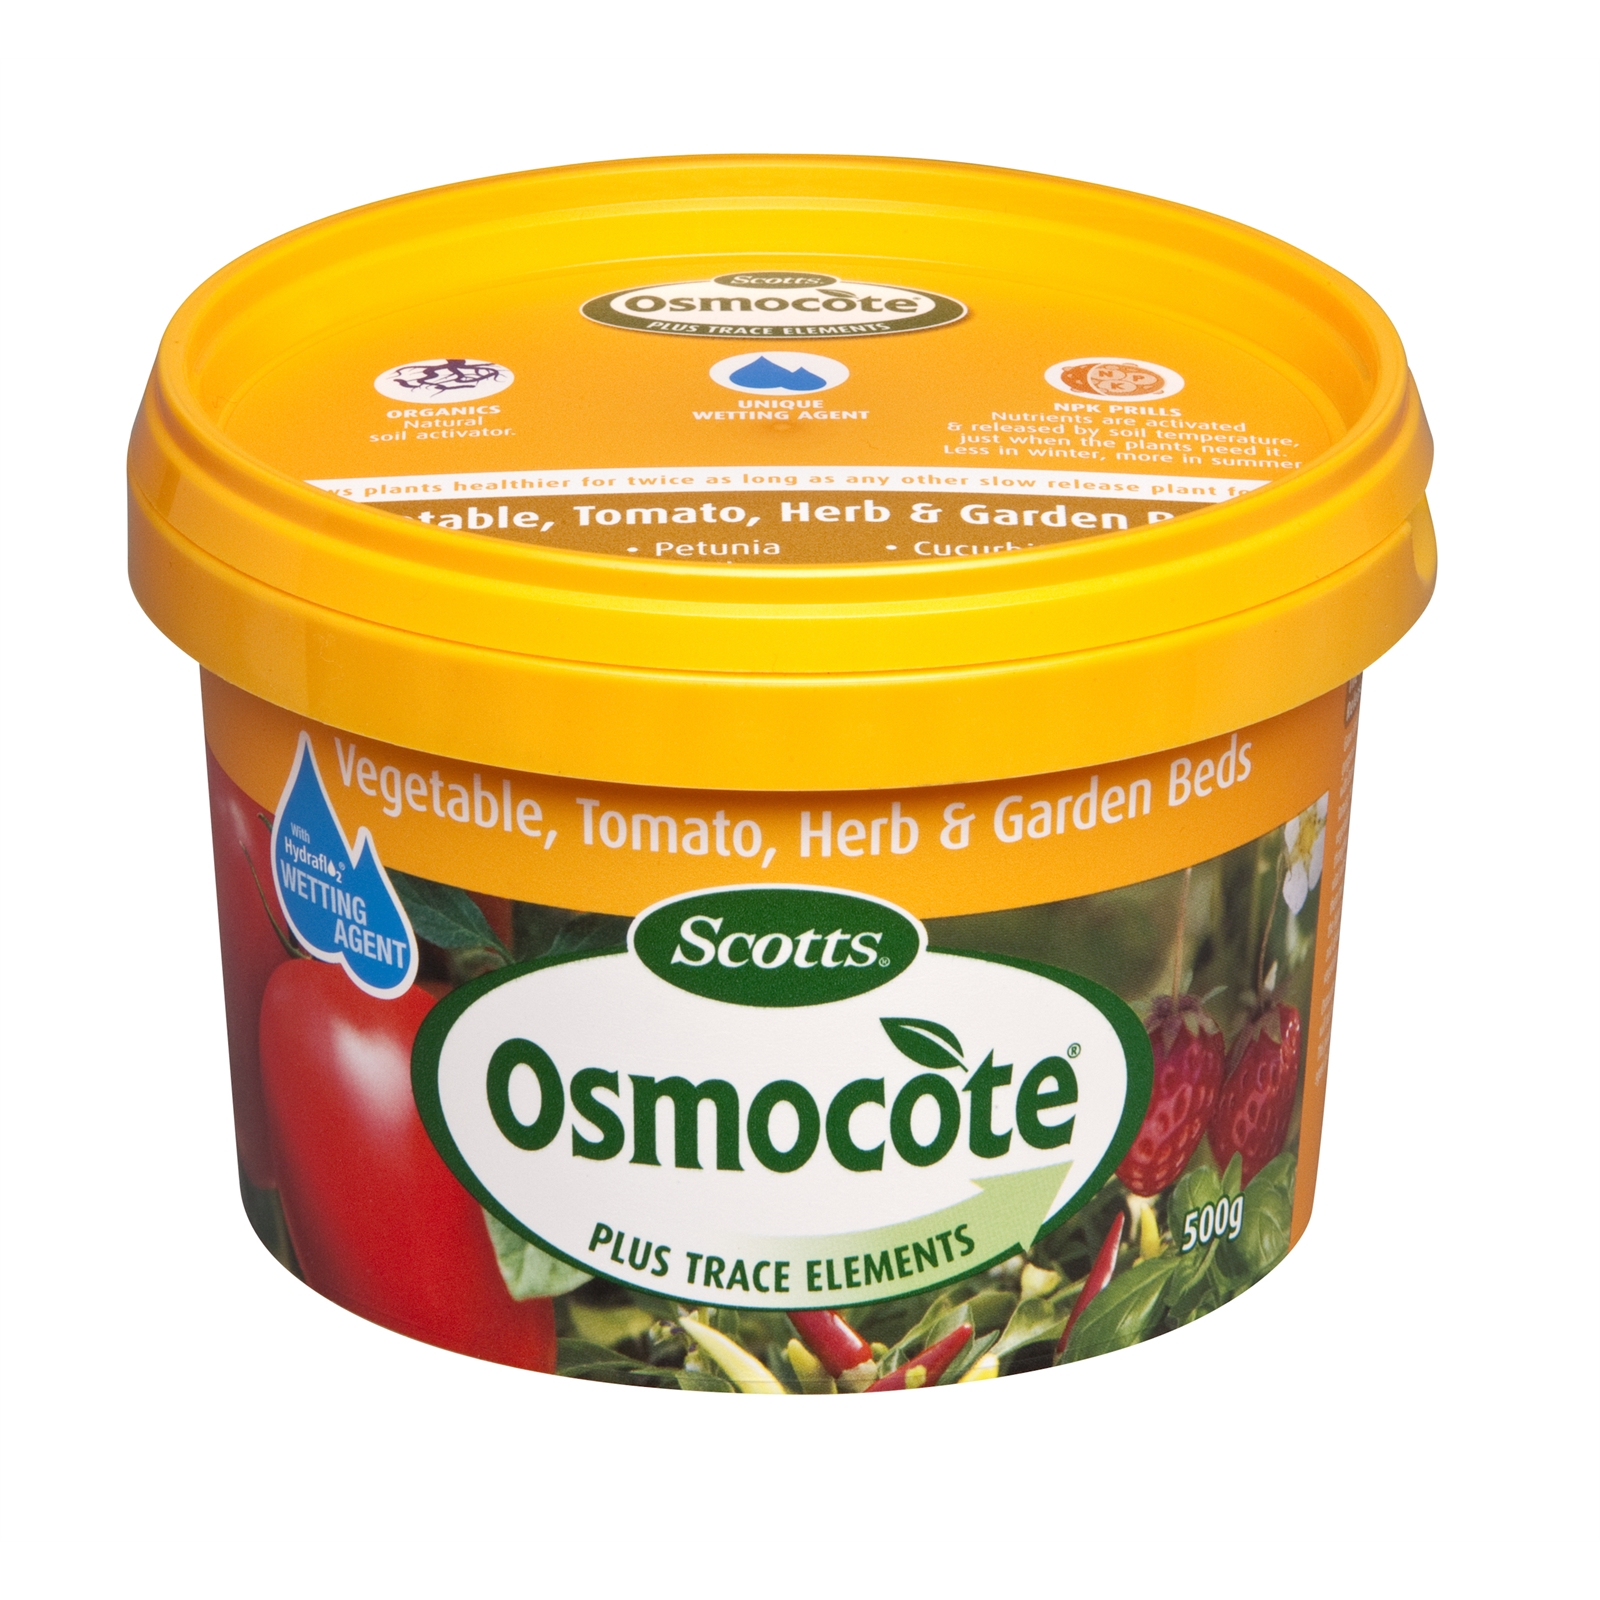 Osmocote 500g Vegetable / Tomato / Herb / Garden Beds Fertiliser